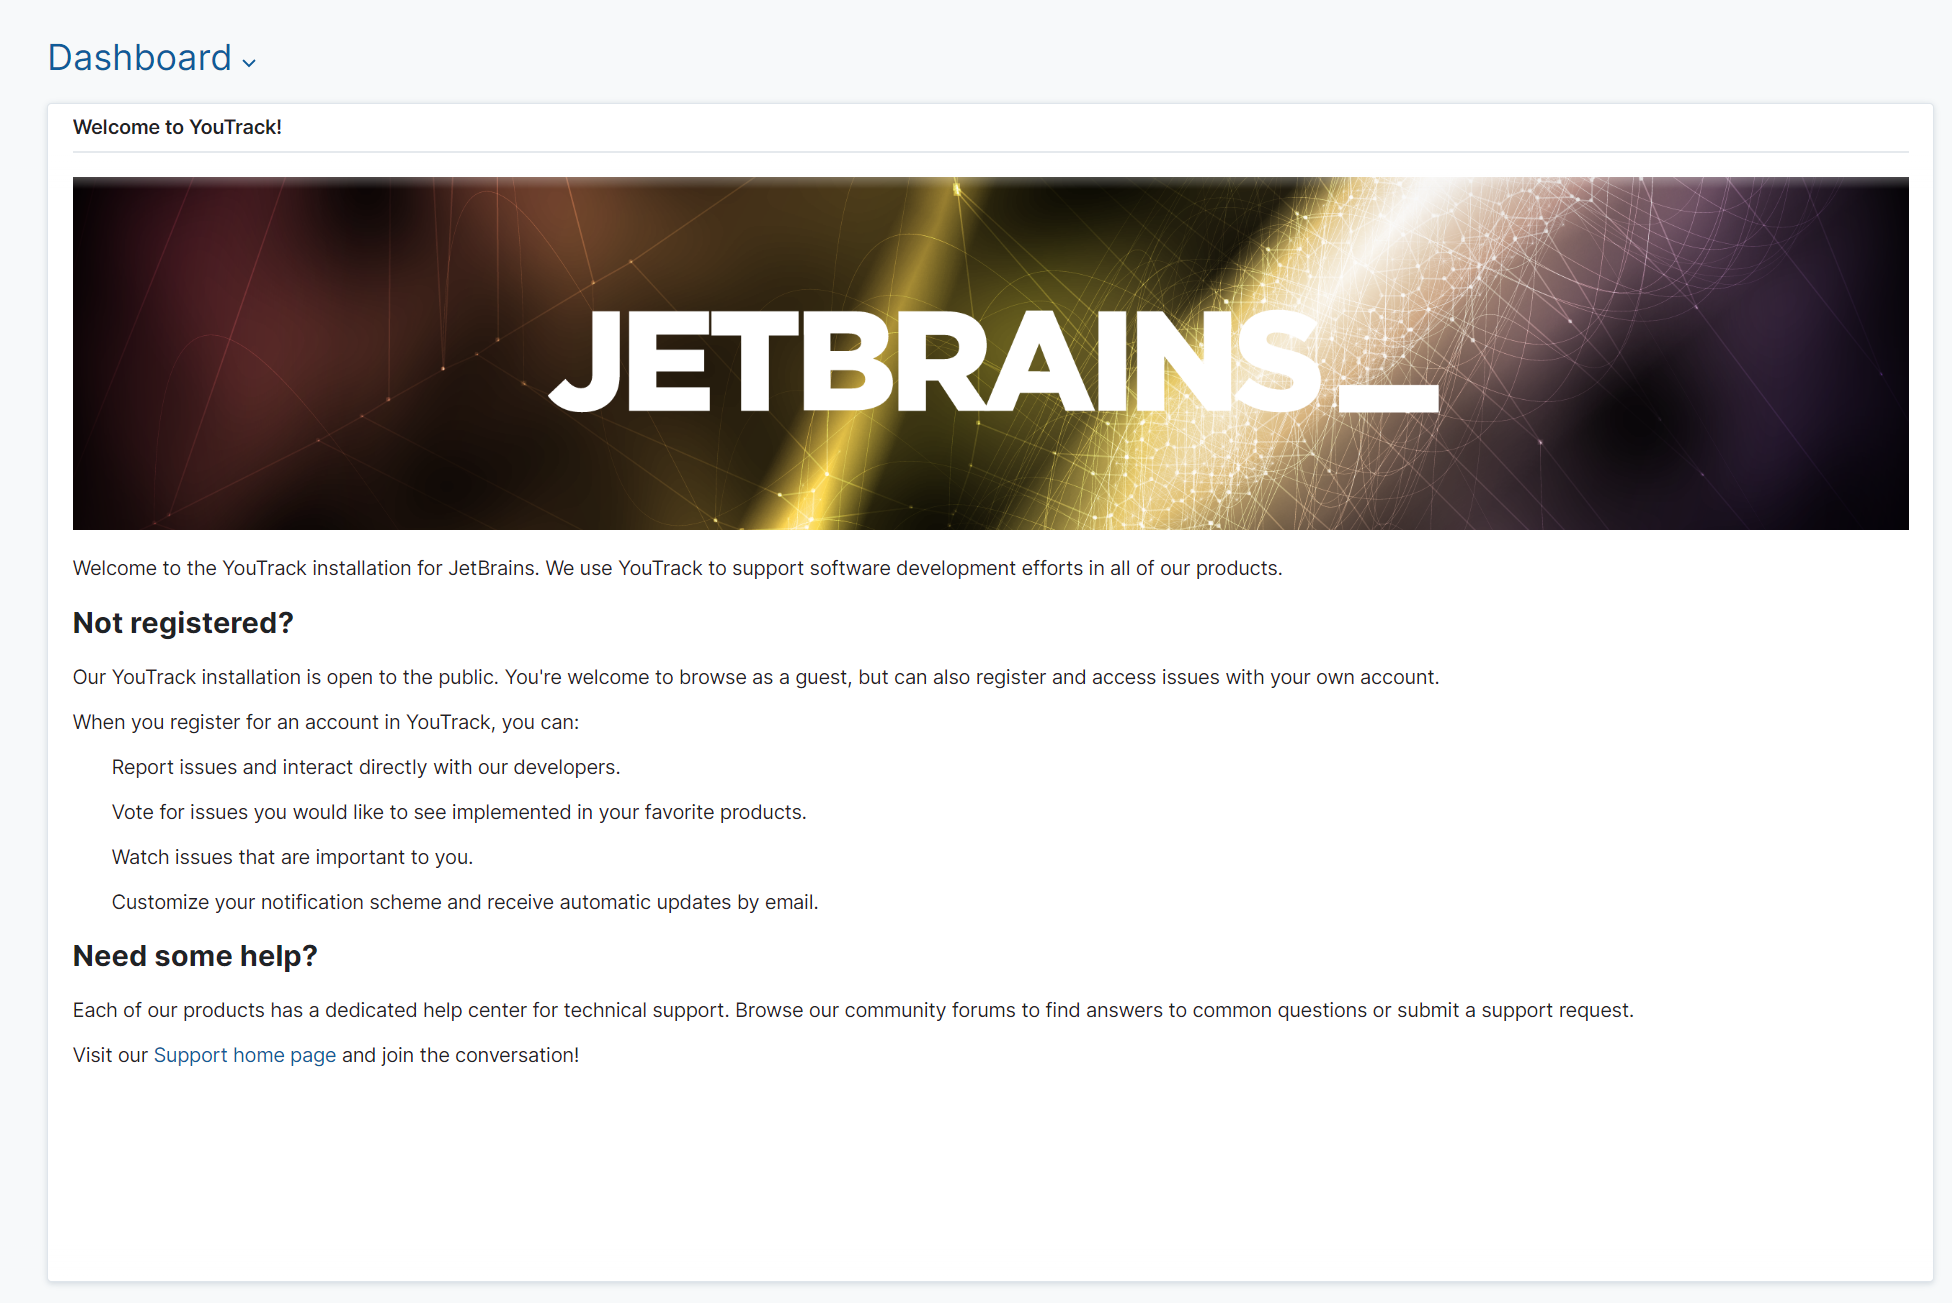 JetBrains guest dashboard